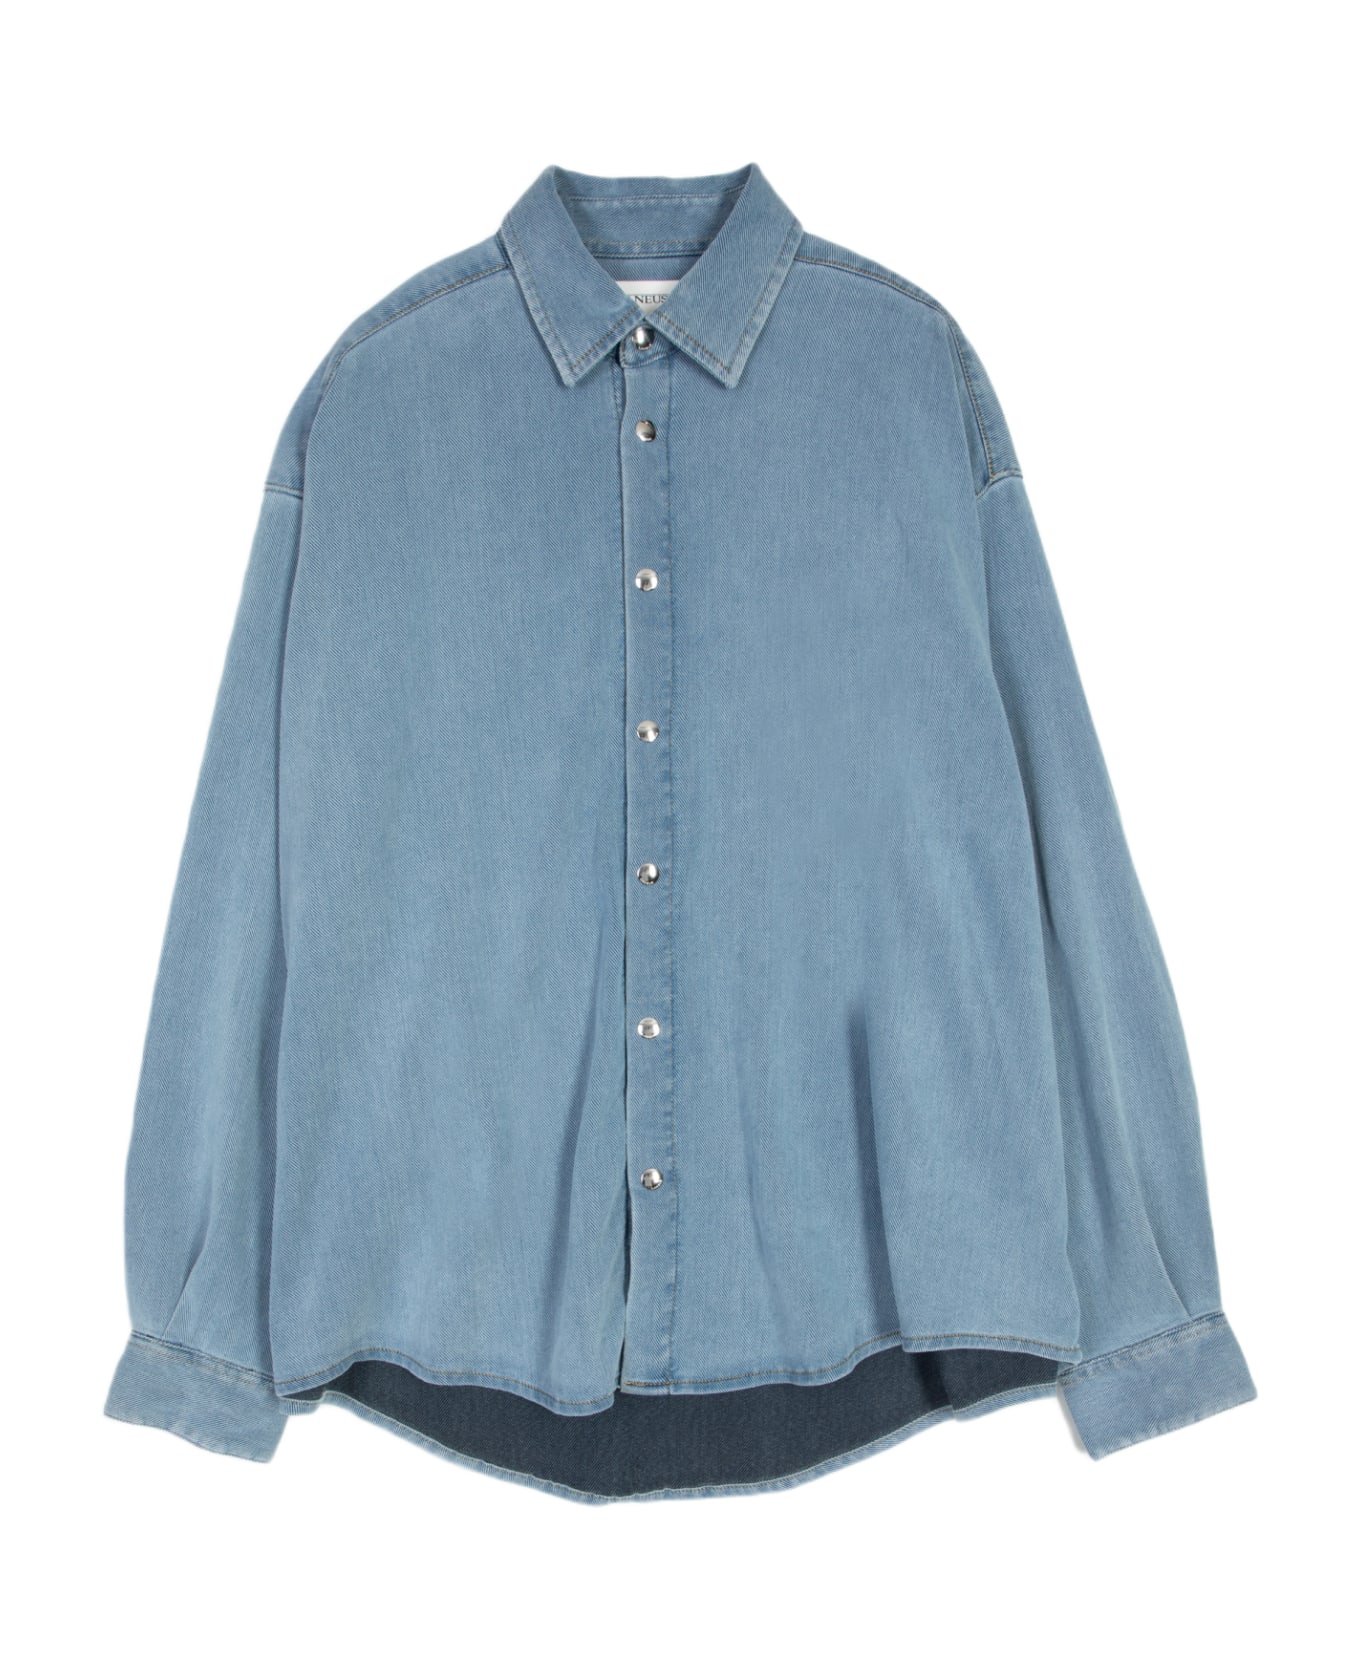 Laneus Denim Shirt Man Light blue chambray denim oversize shirt - Denim Shirt - Denim chiaro